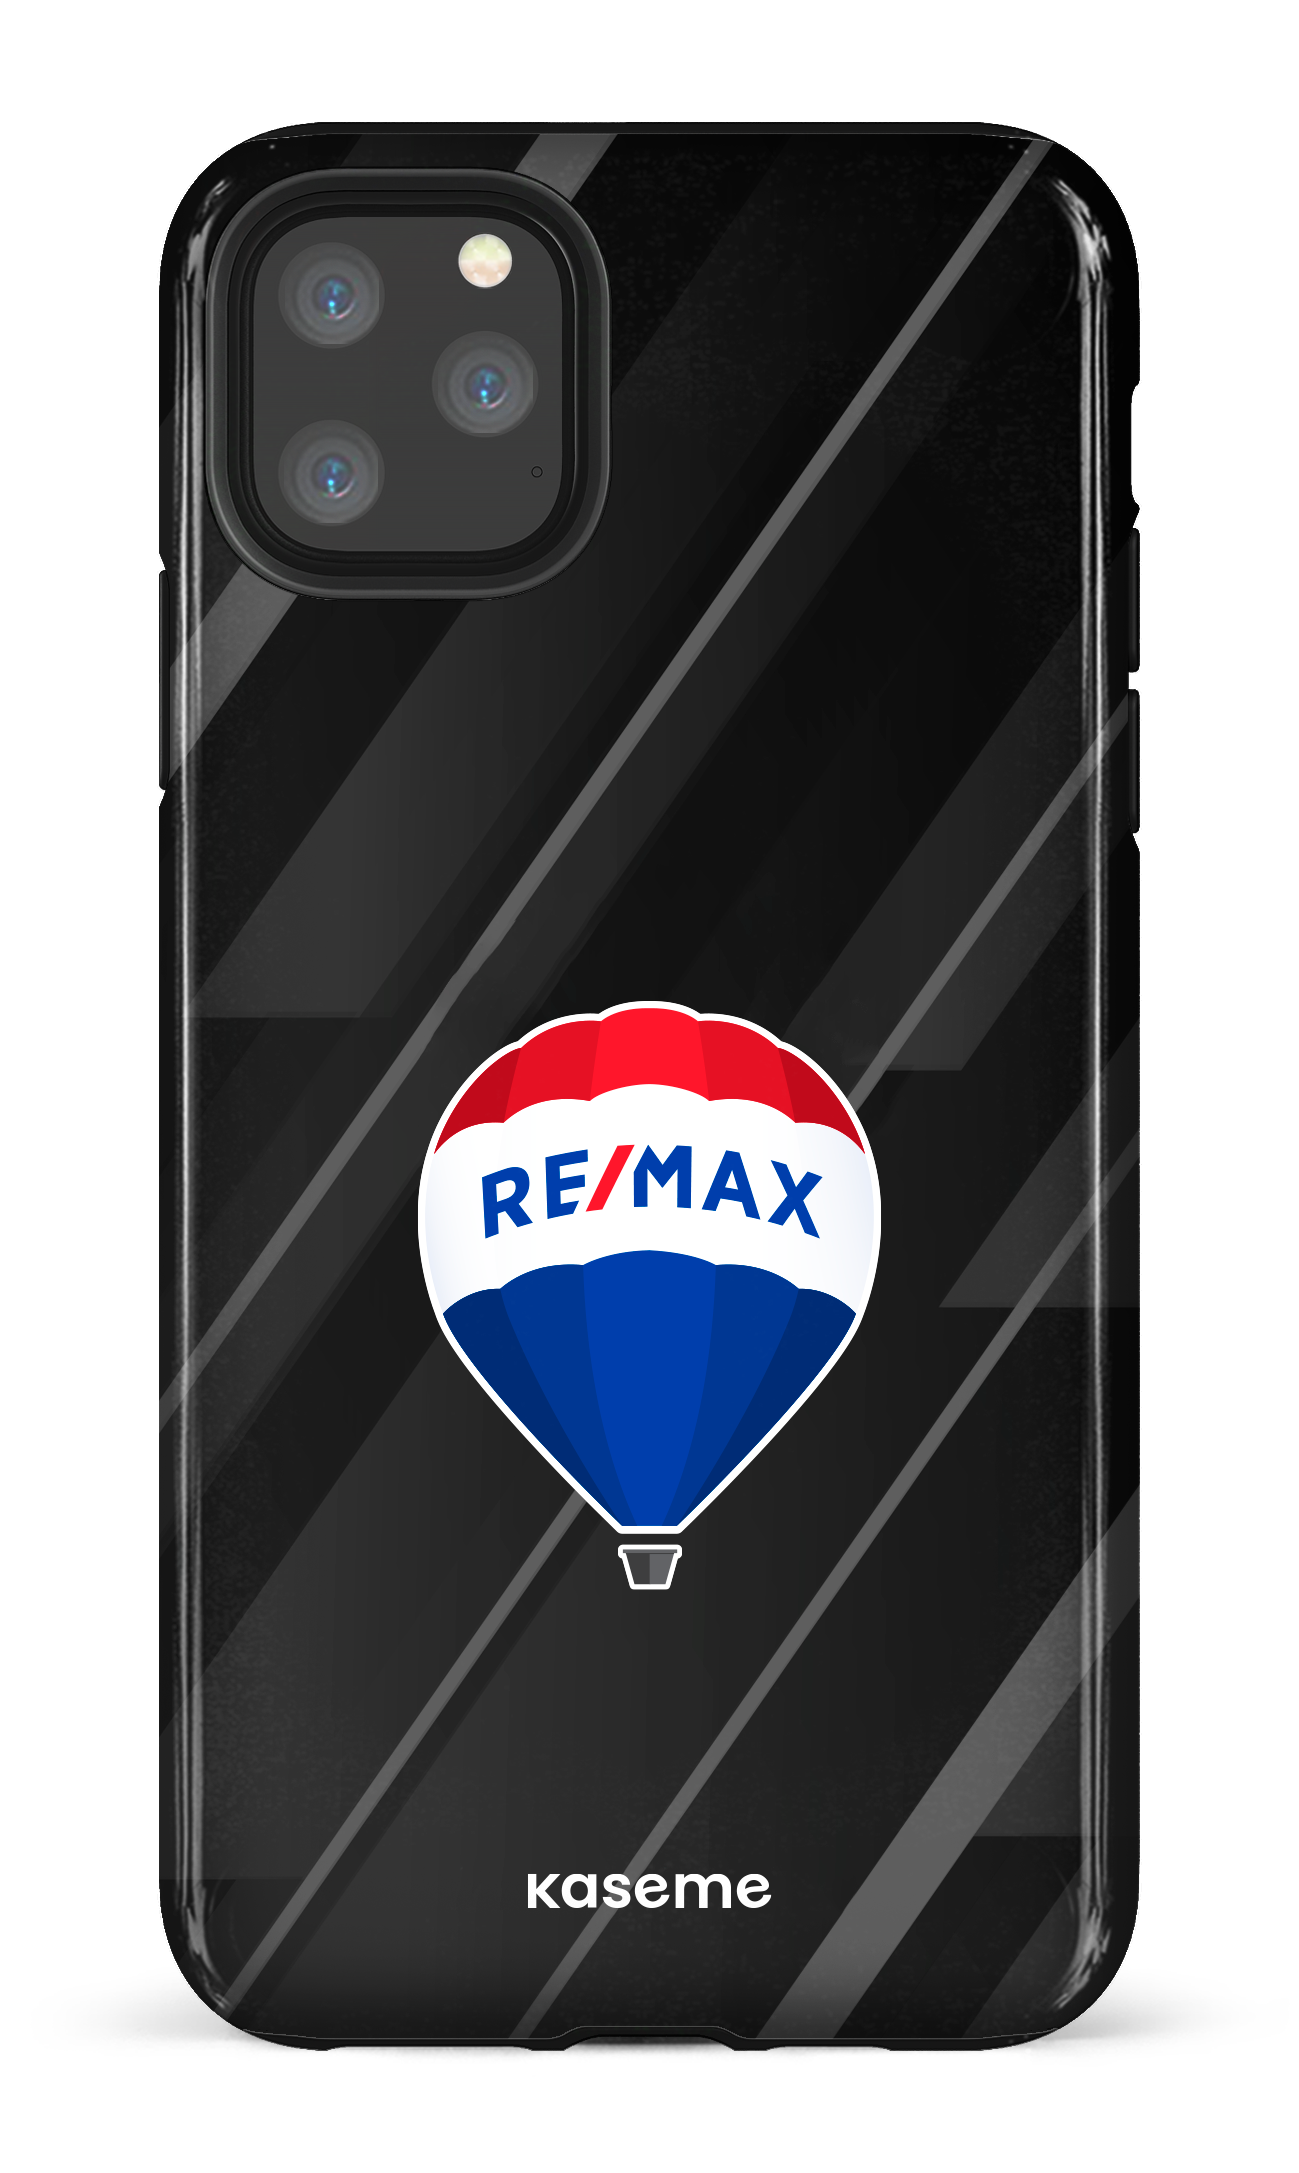 Remax Noir - iPhone 11 Pro Max